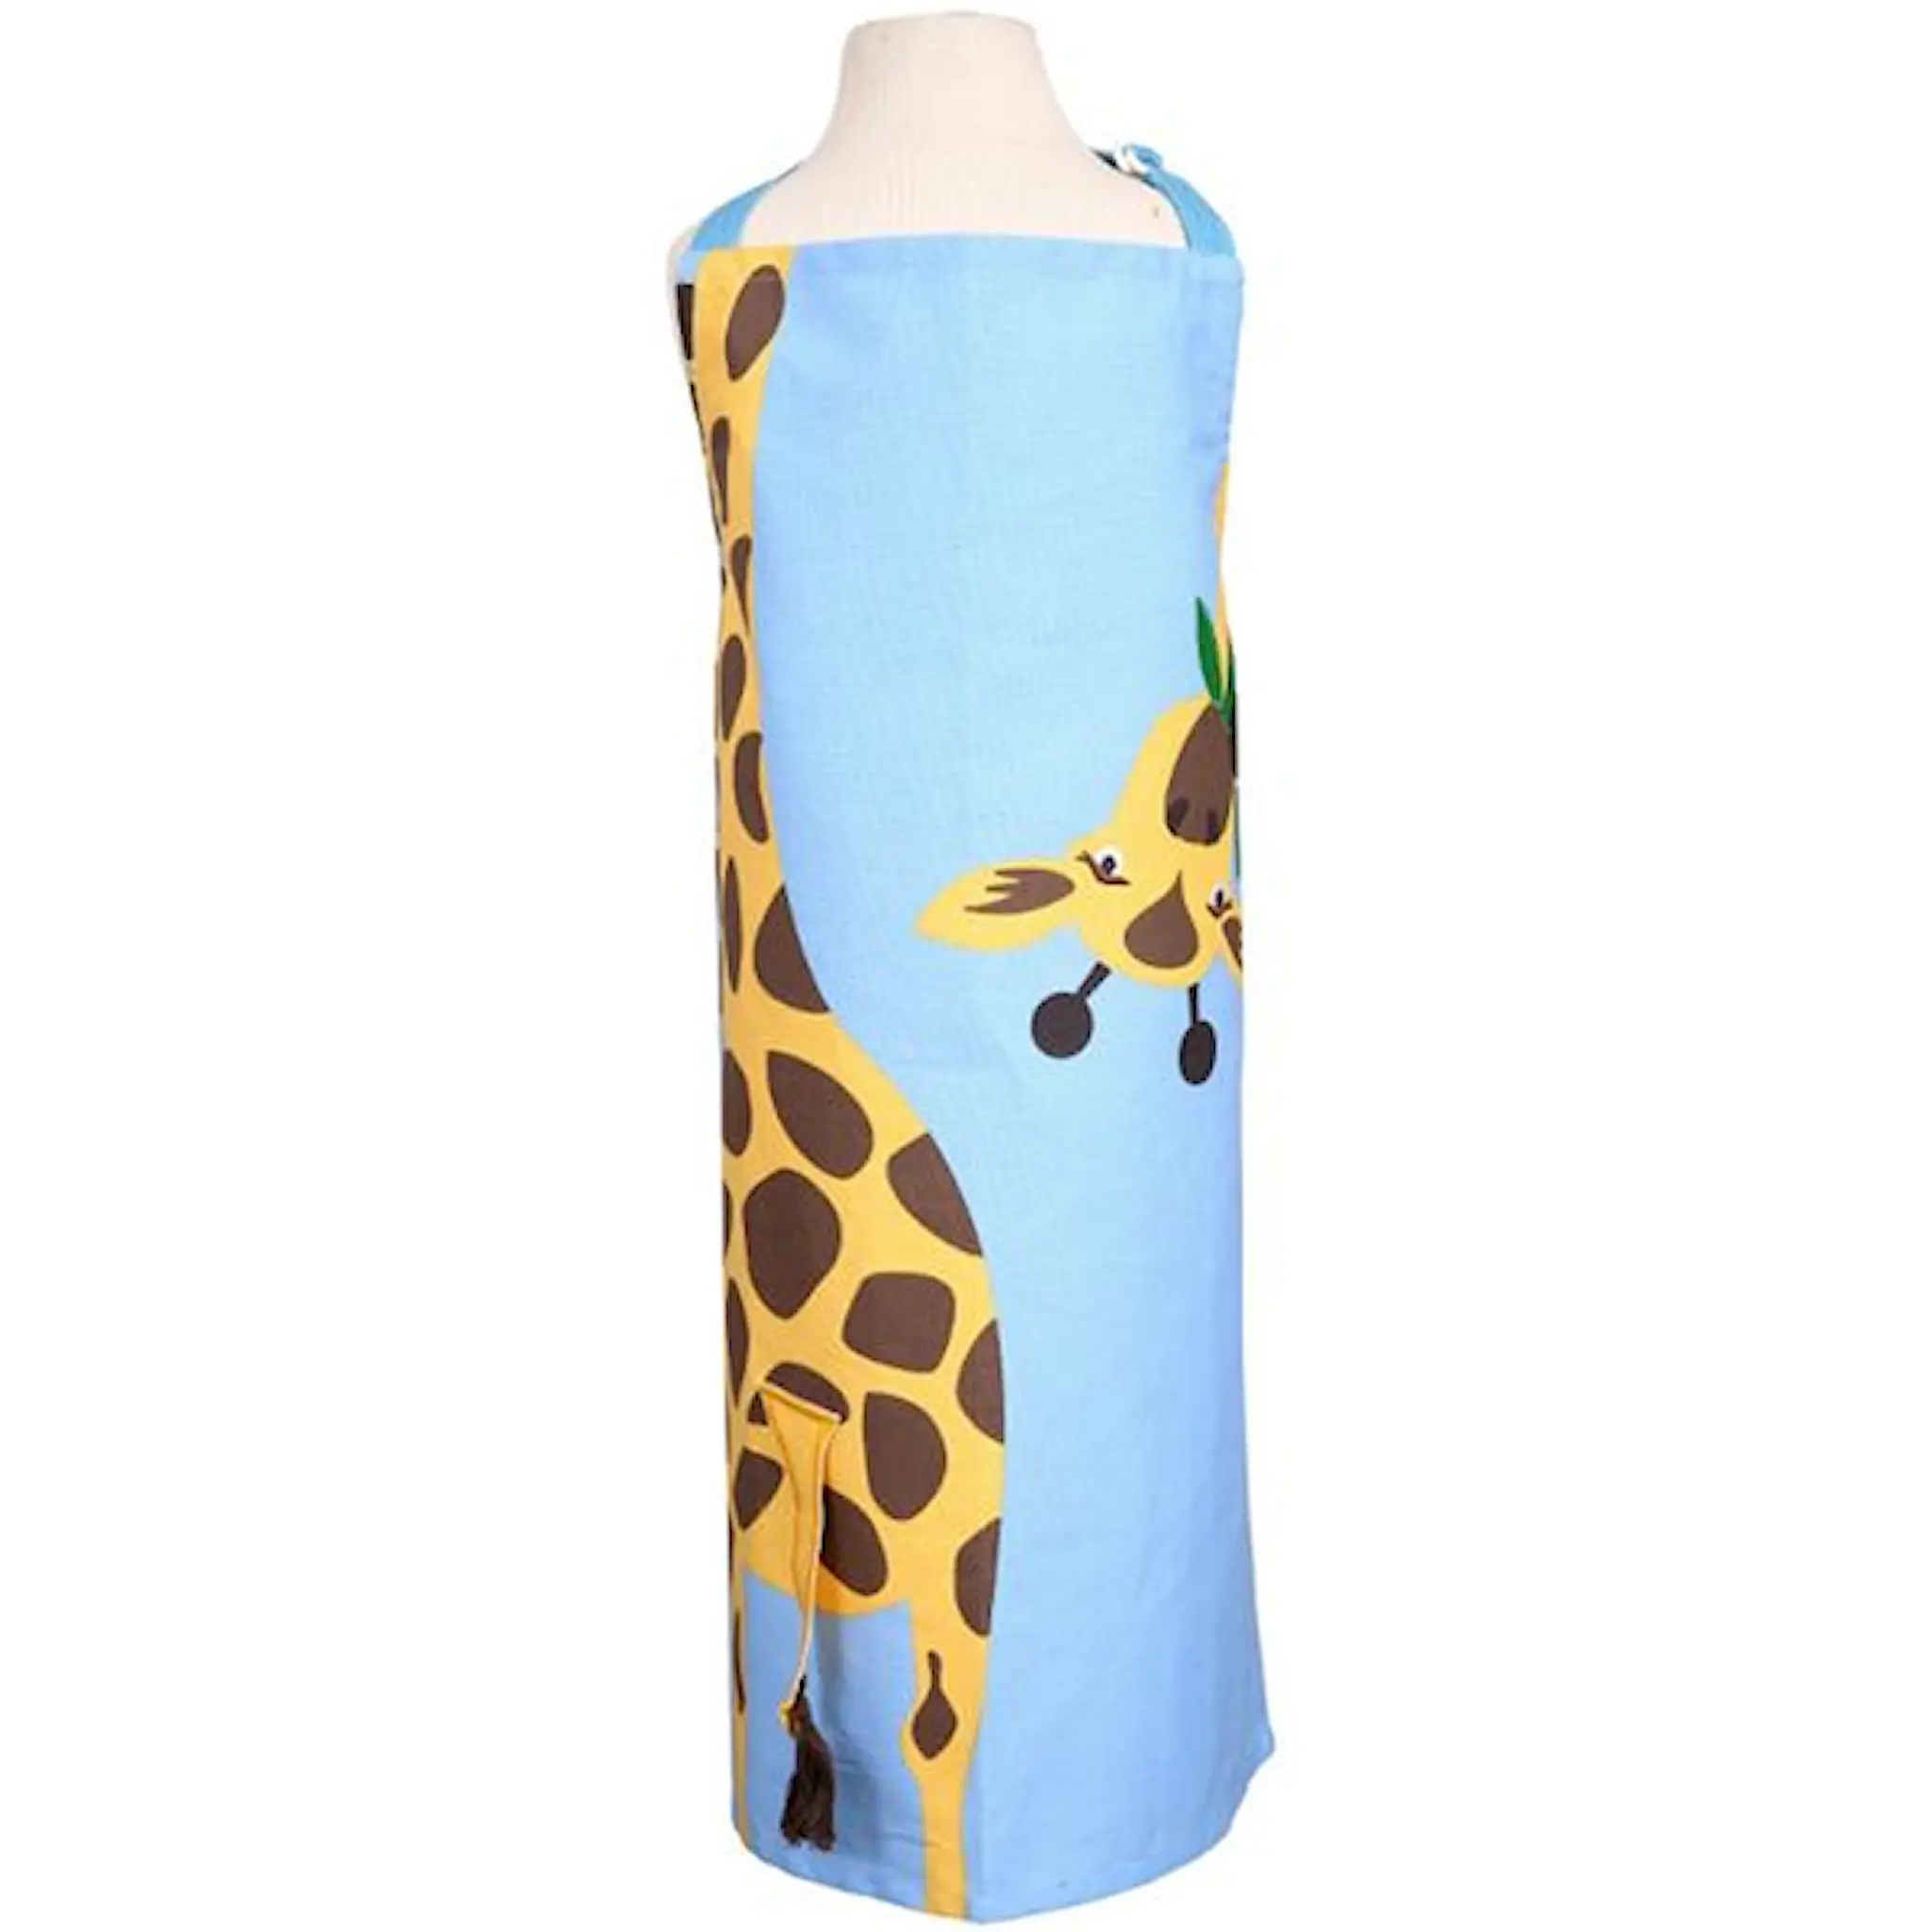 Dexam Dexm Textil Lasten Esiliina Giraffe